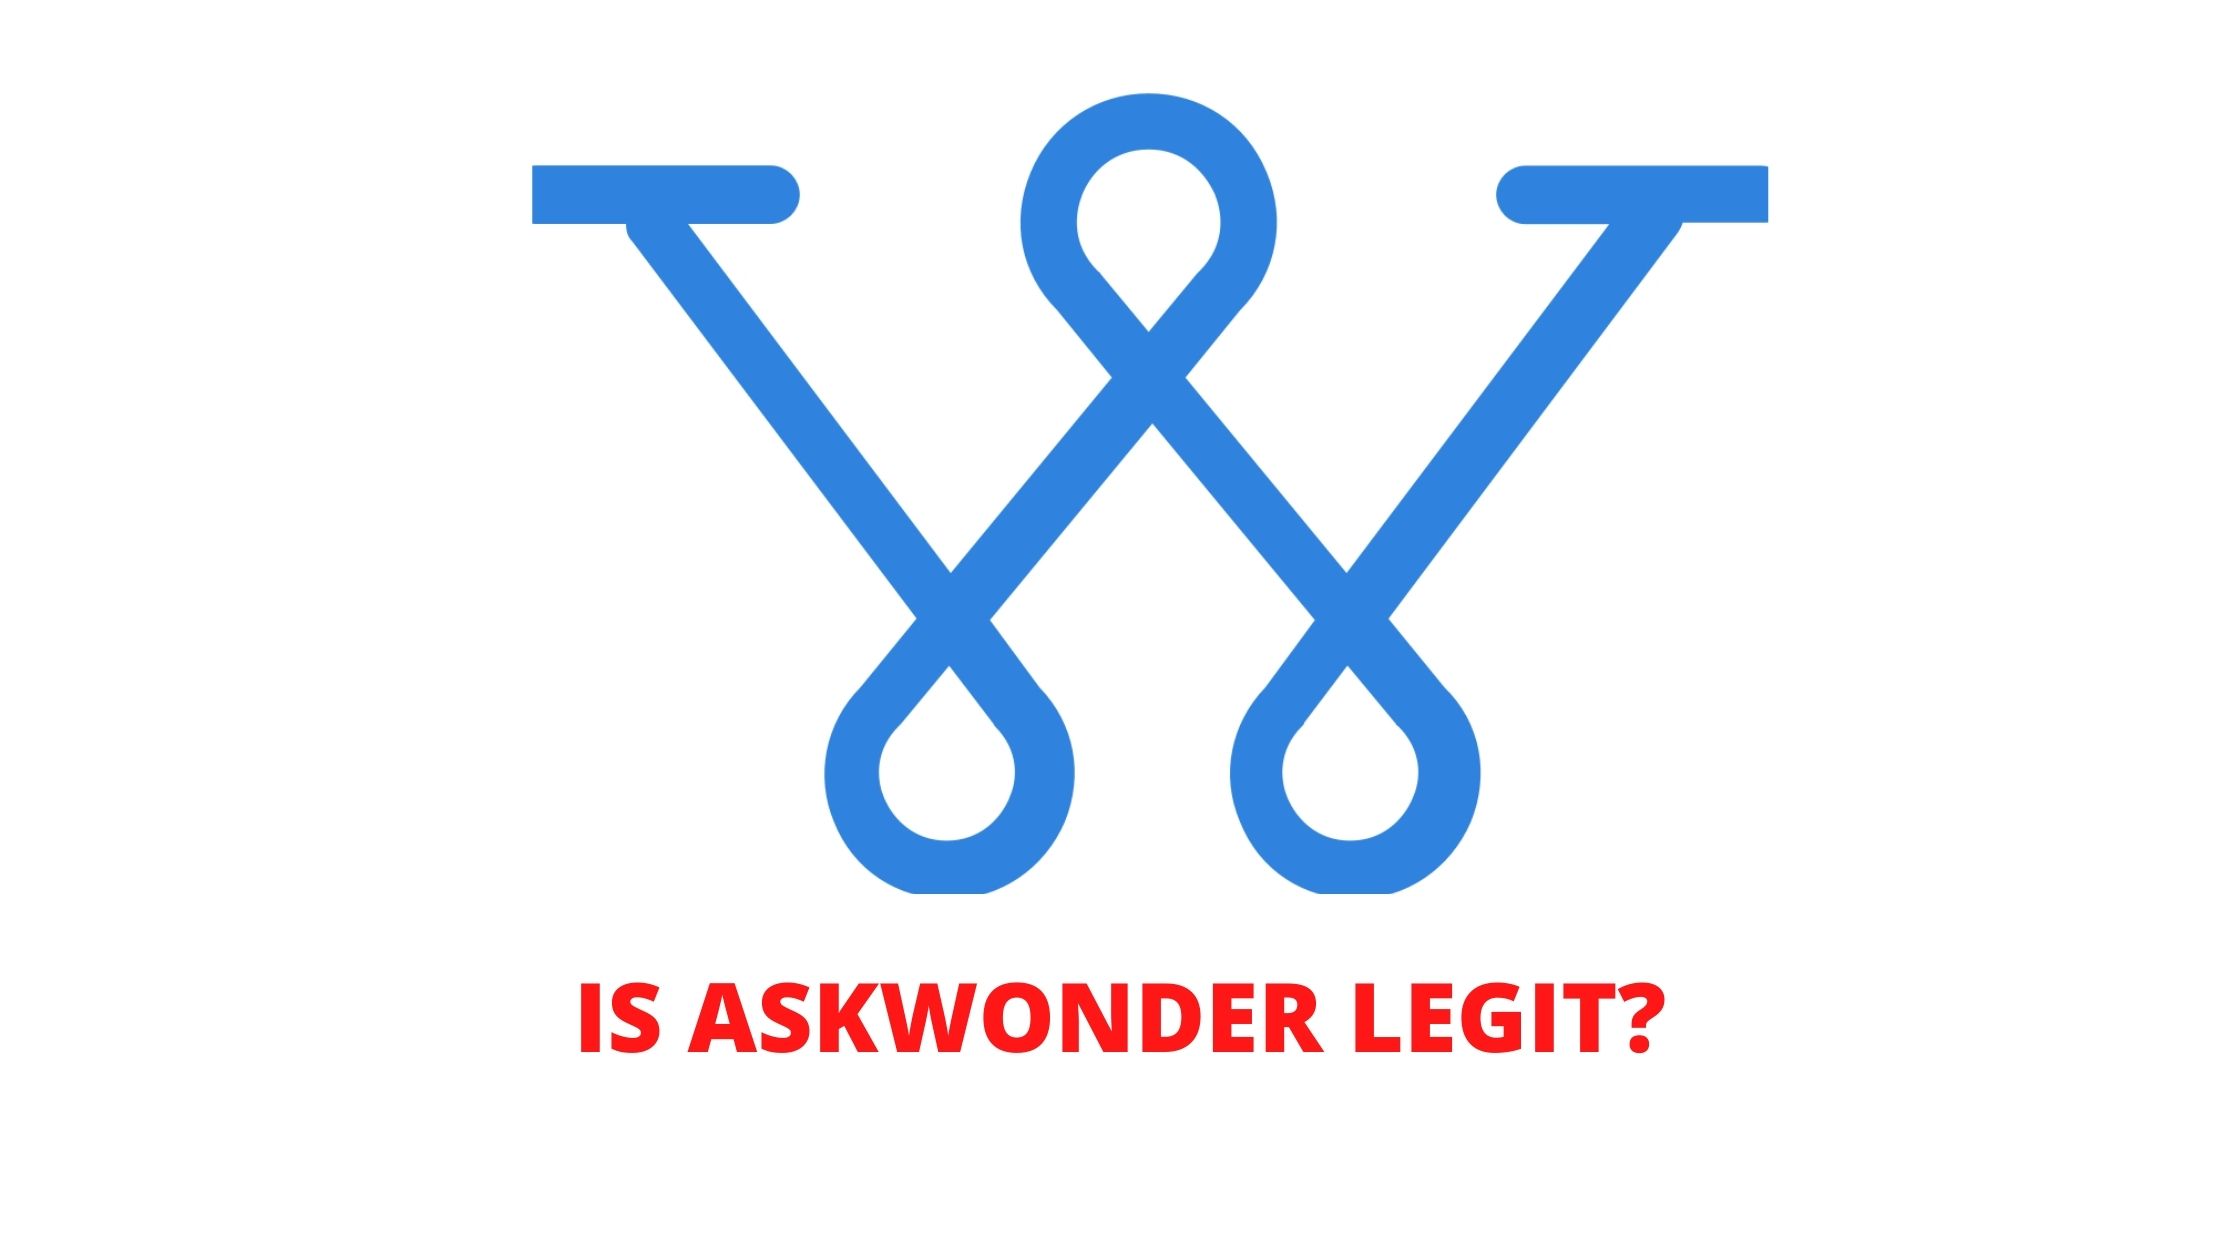 Is AskWonder a legitimate company?